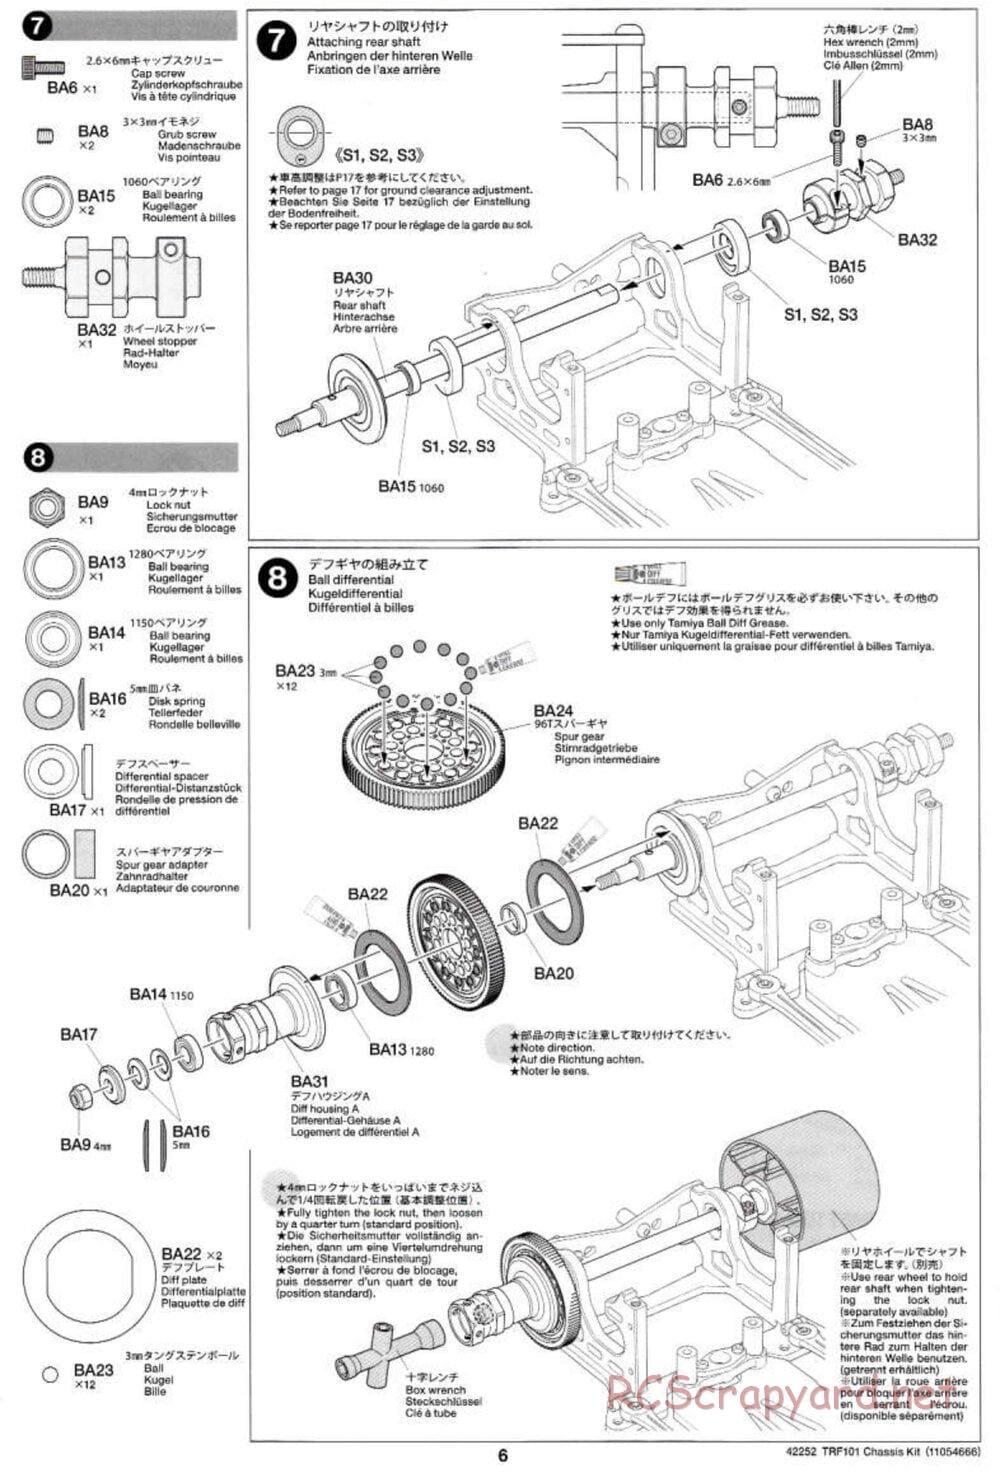 Tamiya - TRF101 Chassis - Manual - Page 6